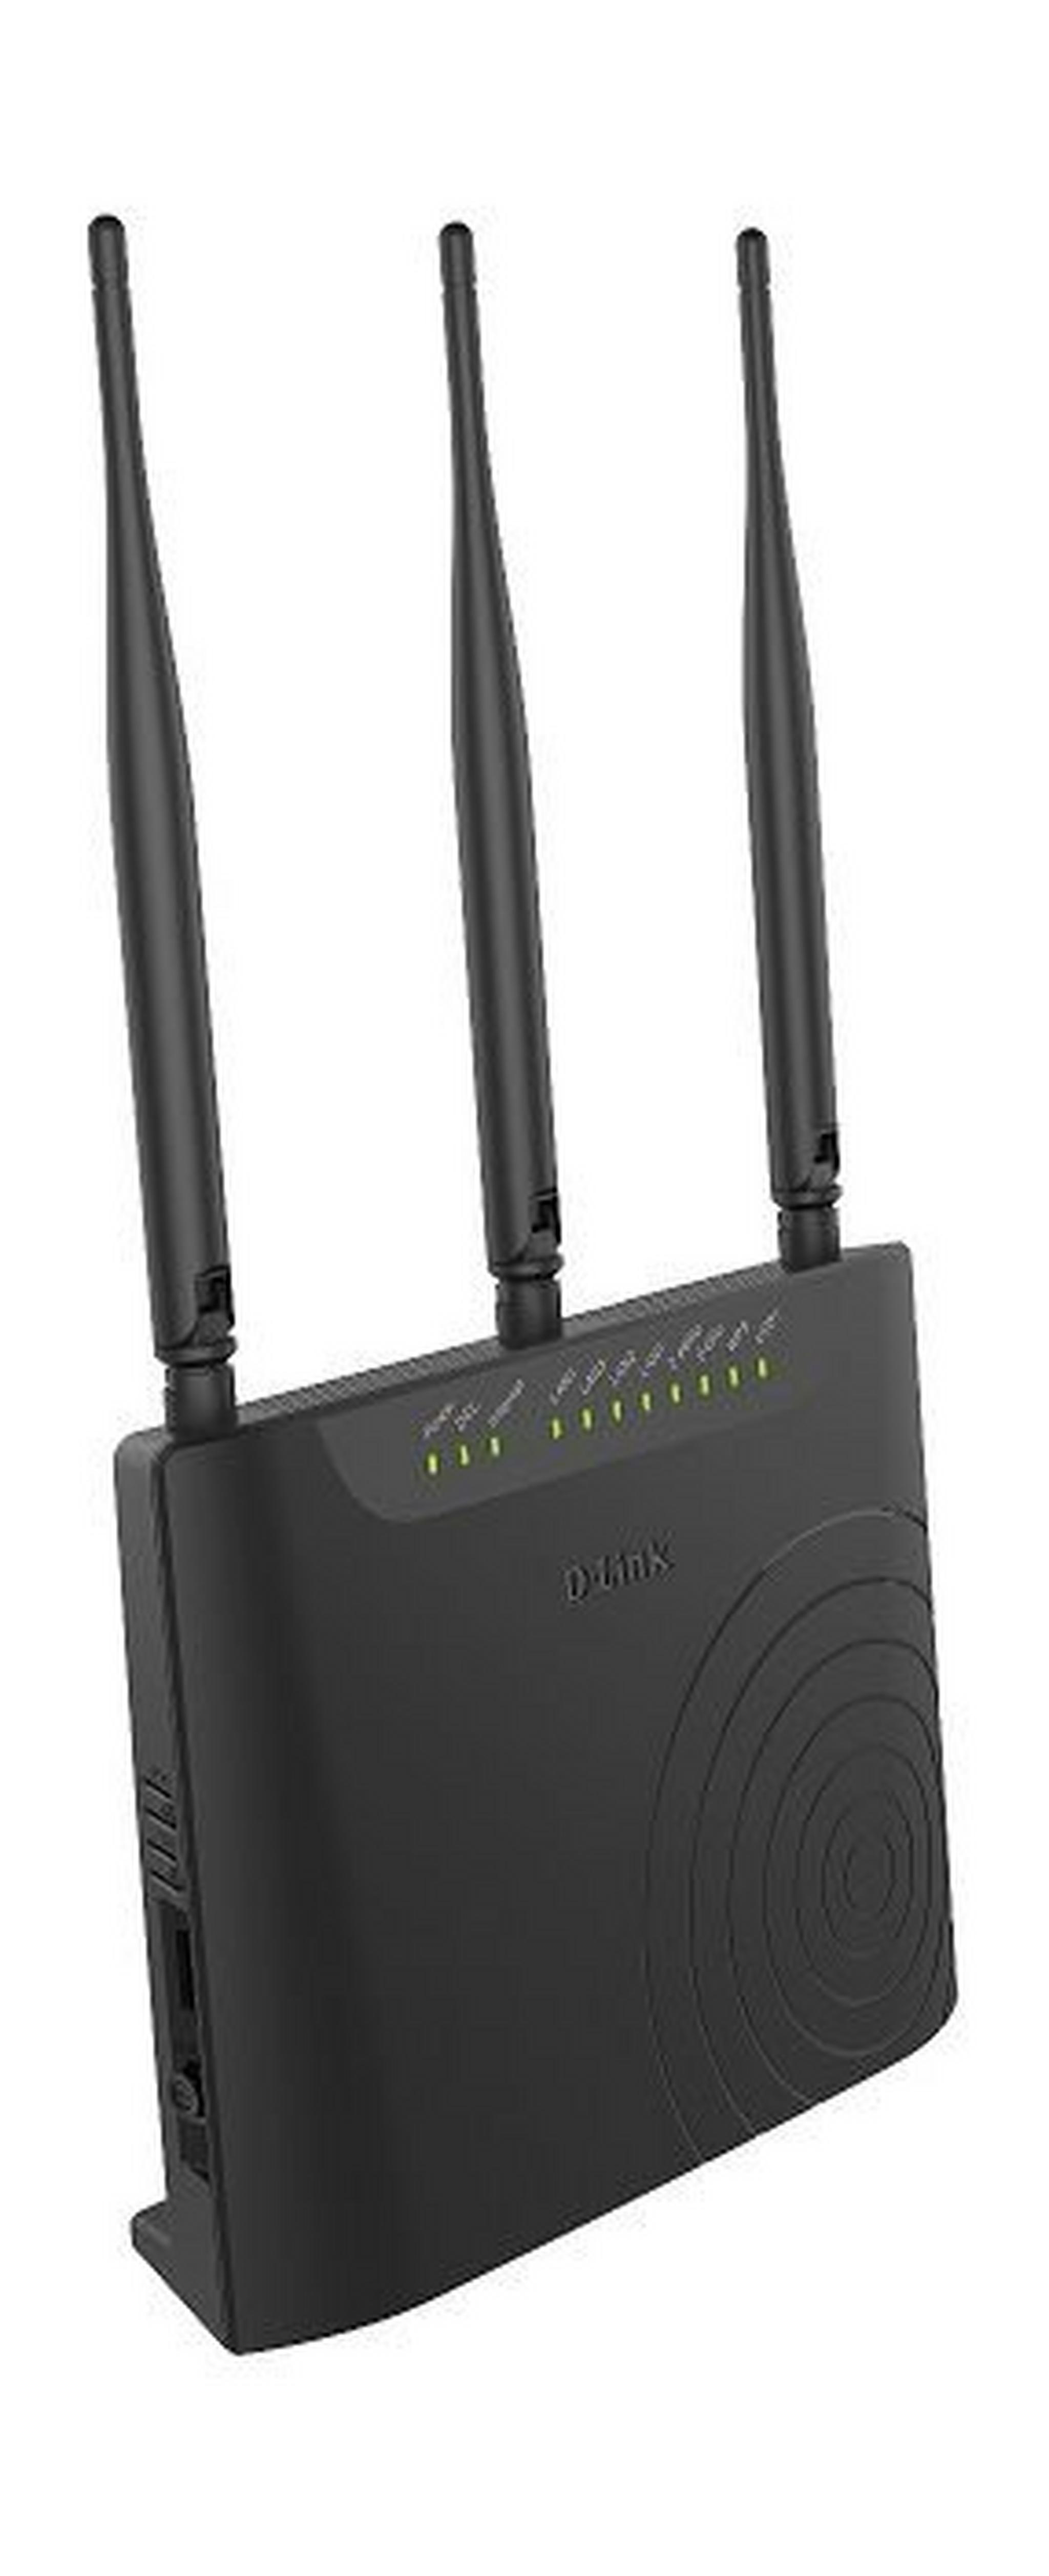 D-Link DSL-2877AL Dual Band Wireless AC750 ADSL2+ Modem Router